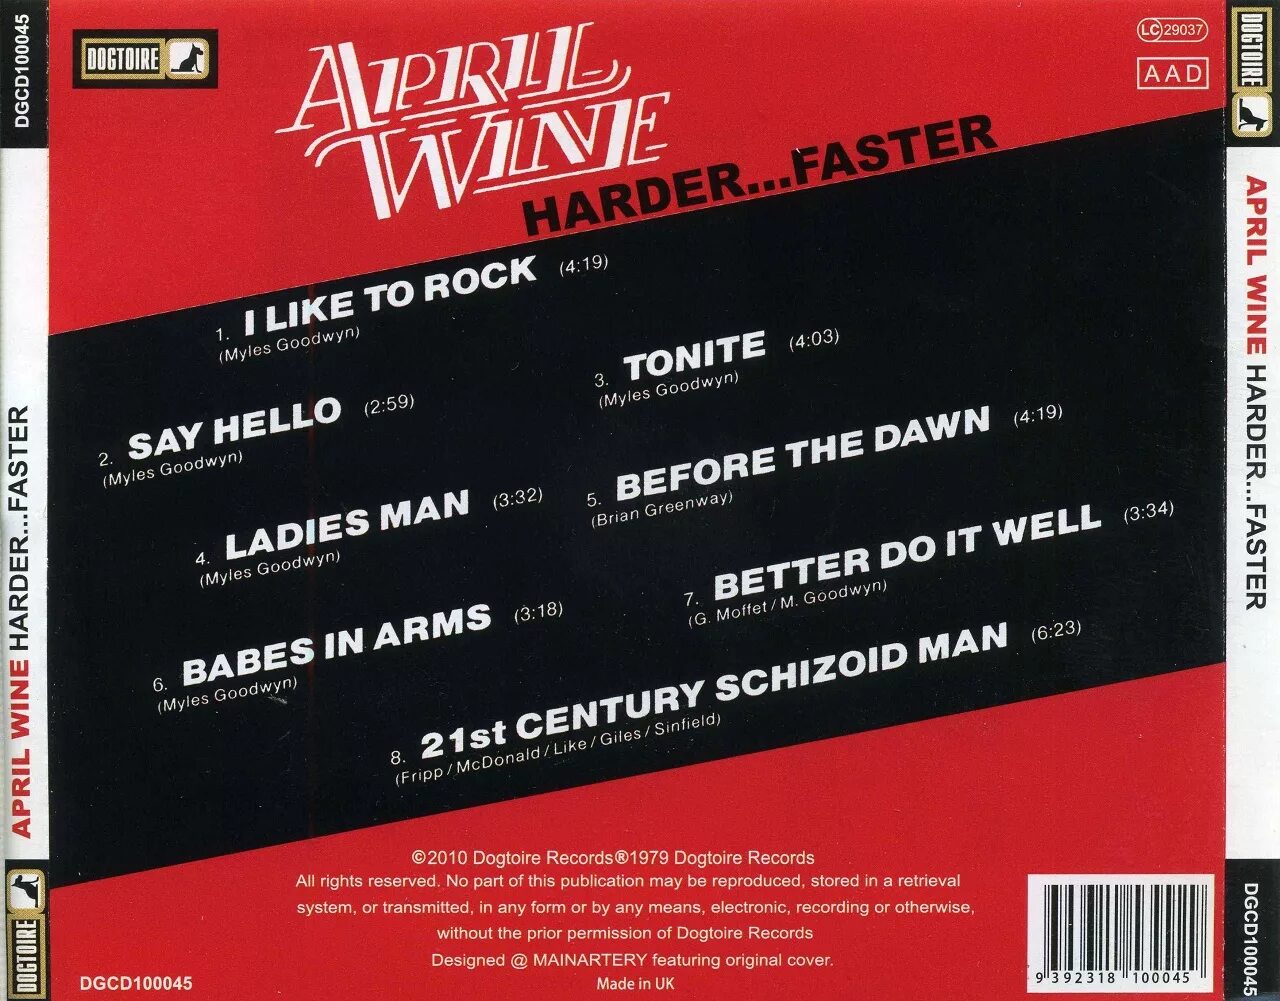 Faster and harder перевод. April Wine "harder... Faster". April Wine CD. April Wine harder faster 1979. April Wine 1971 April Wine.